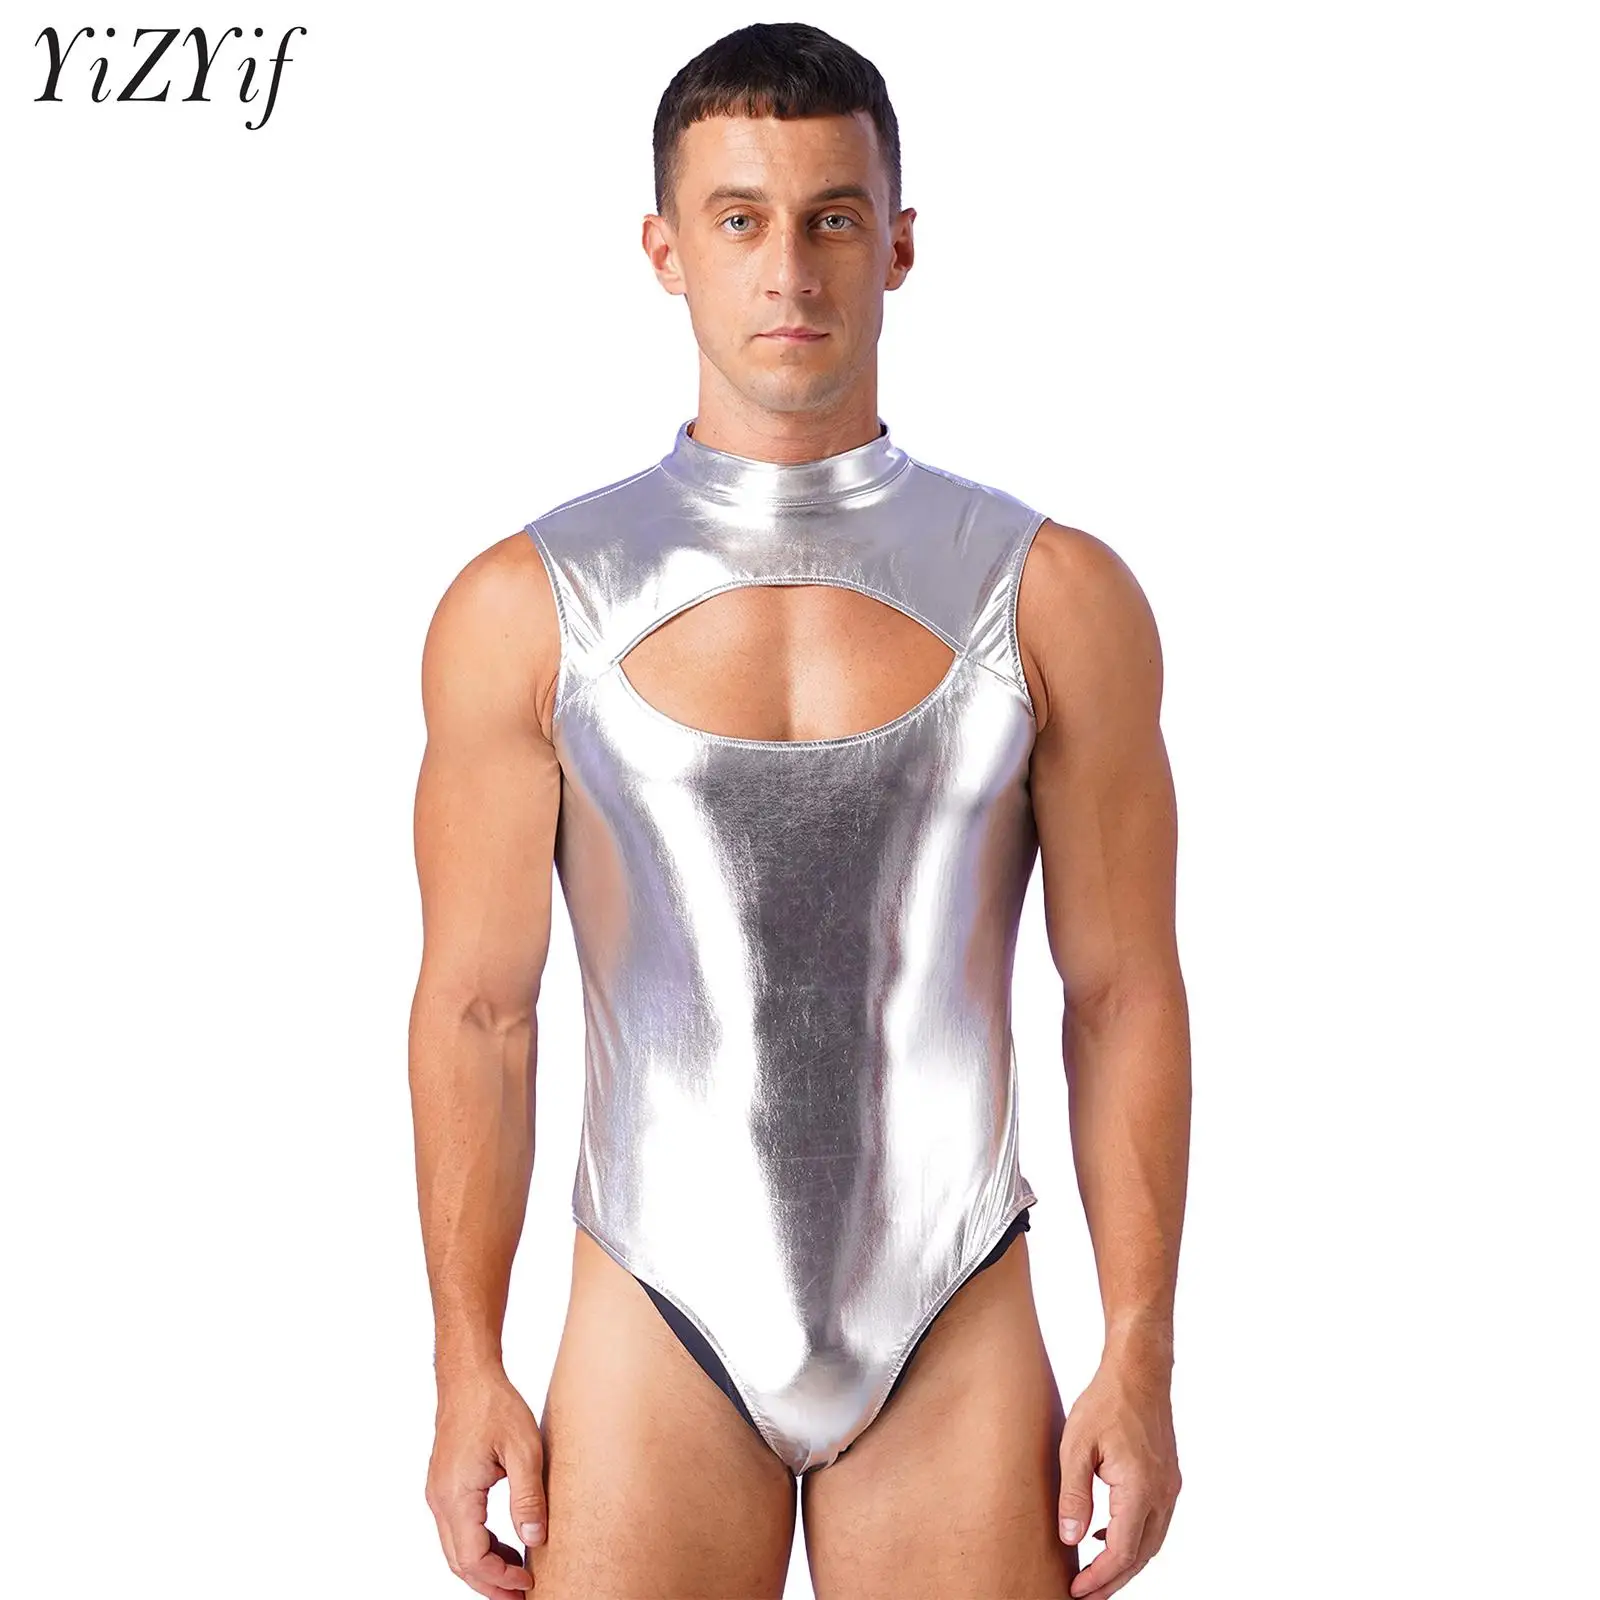 

Men Metallic Front Cutout Bodysuit Swimwear Shiny Mock Neck Sleeveless Catsuit Zipper Back Leotard Nightclub Performance Costume